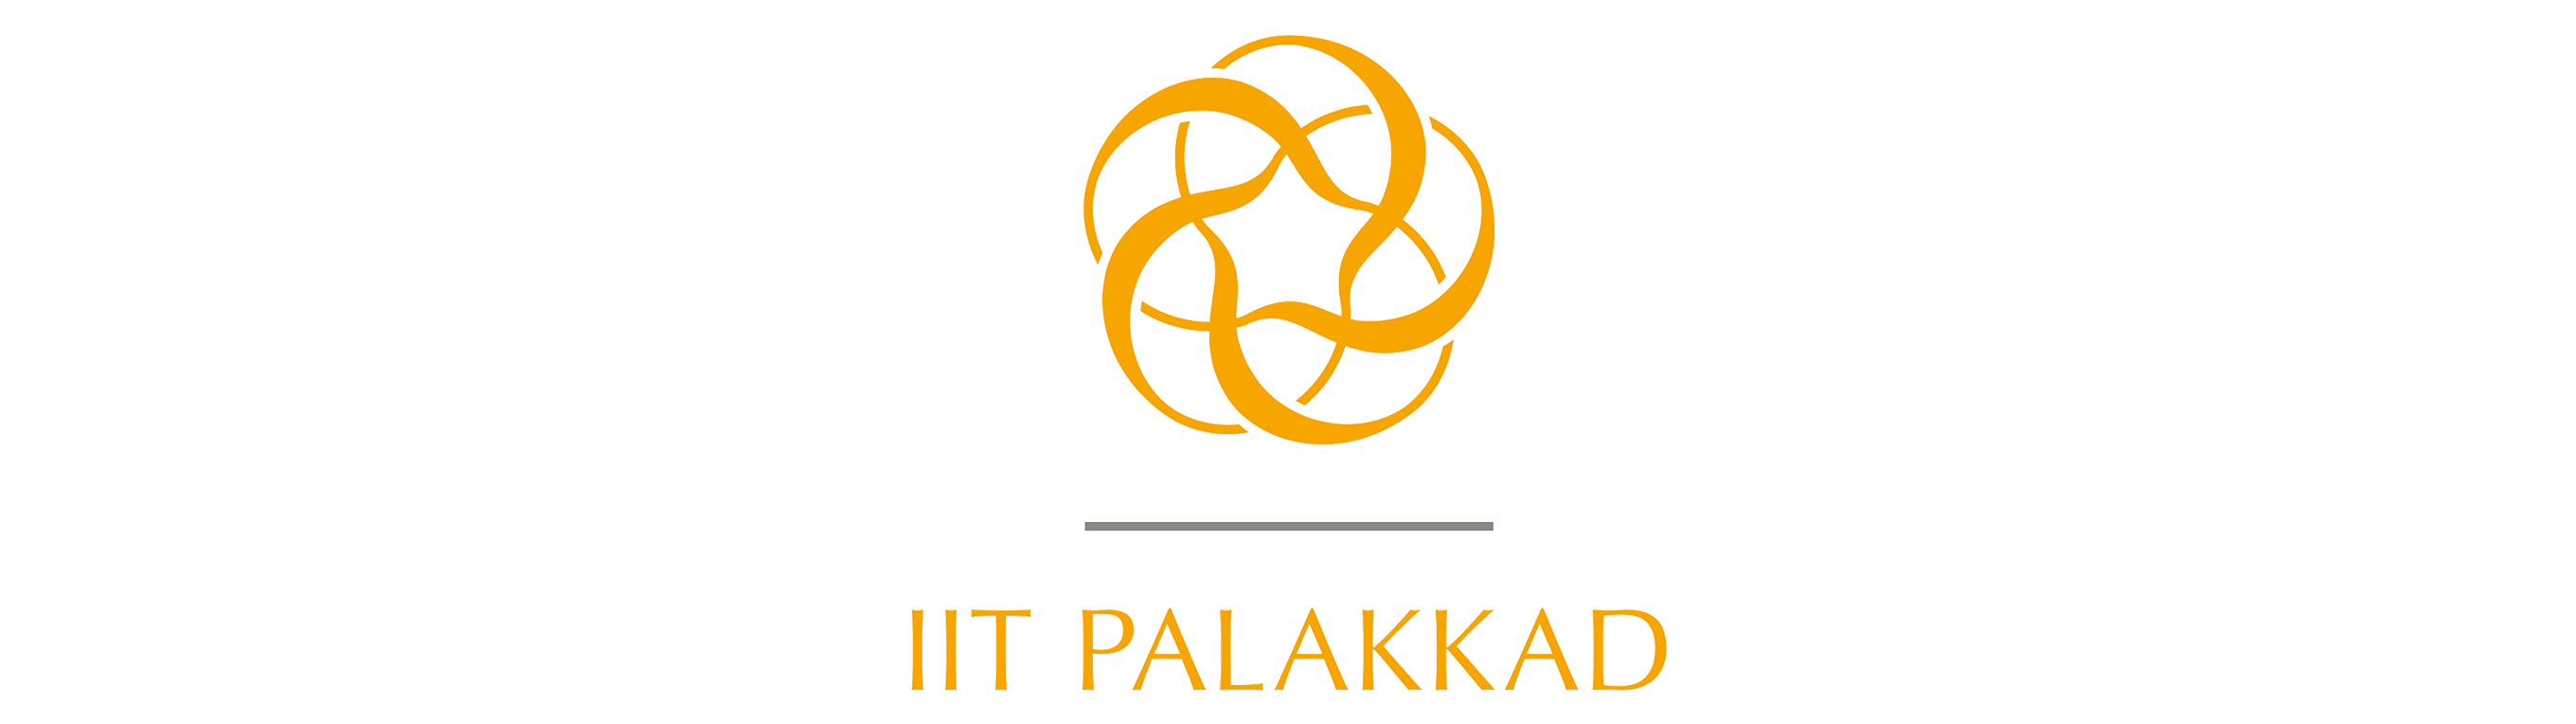 logo-_0006_IIT_PKD_LOGO